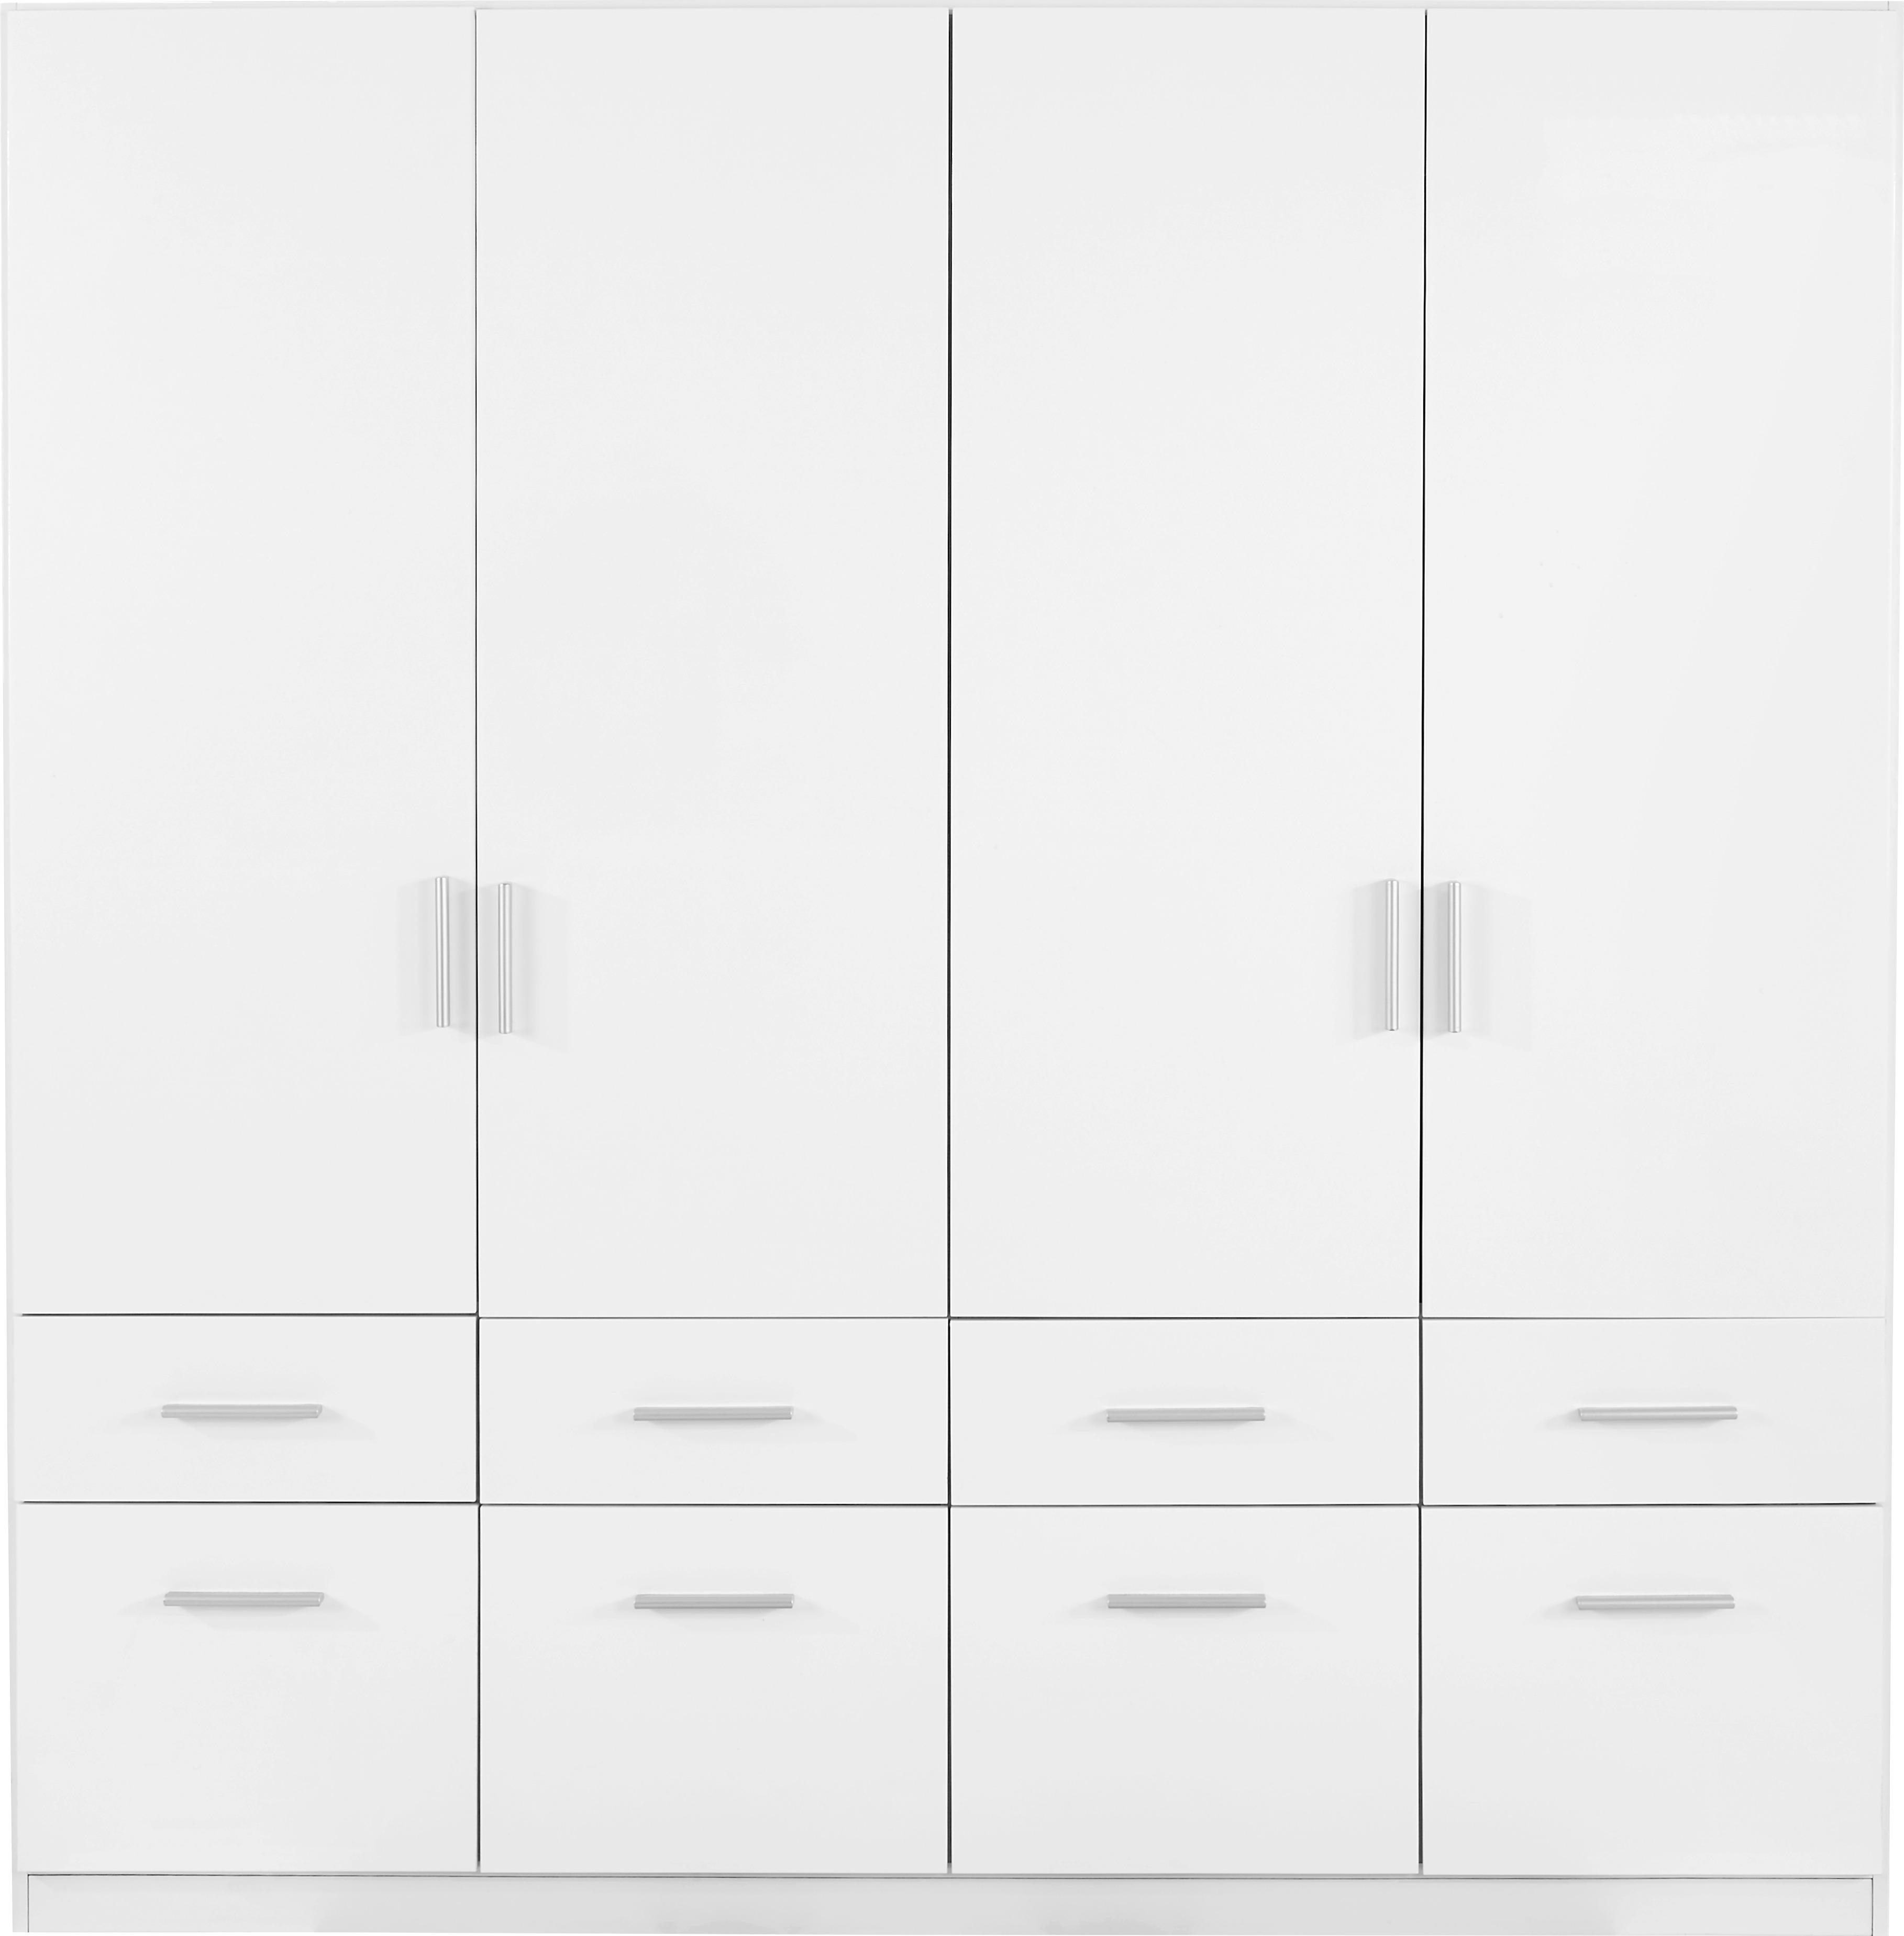 4-dveřová Skříň Se Zásuvkami Celle, Bílá/dub - bílá/barvy dubu, Moderní, dřevo/plast (181/197/54cm)